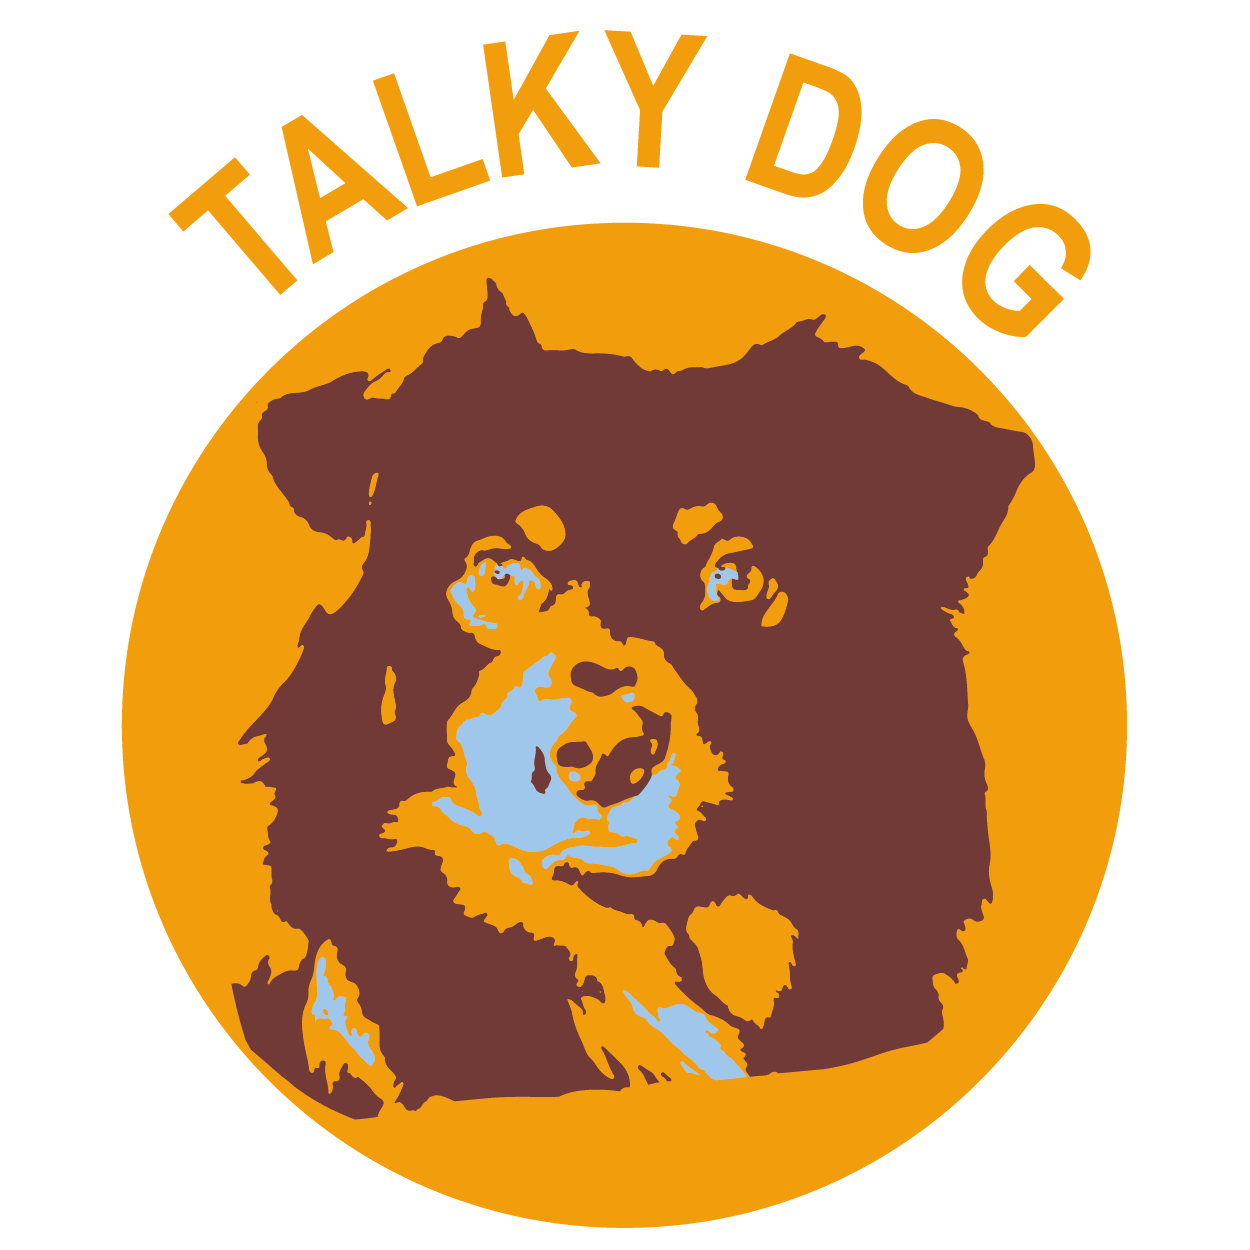 Talky dog